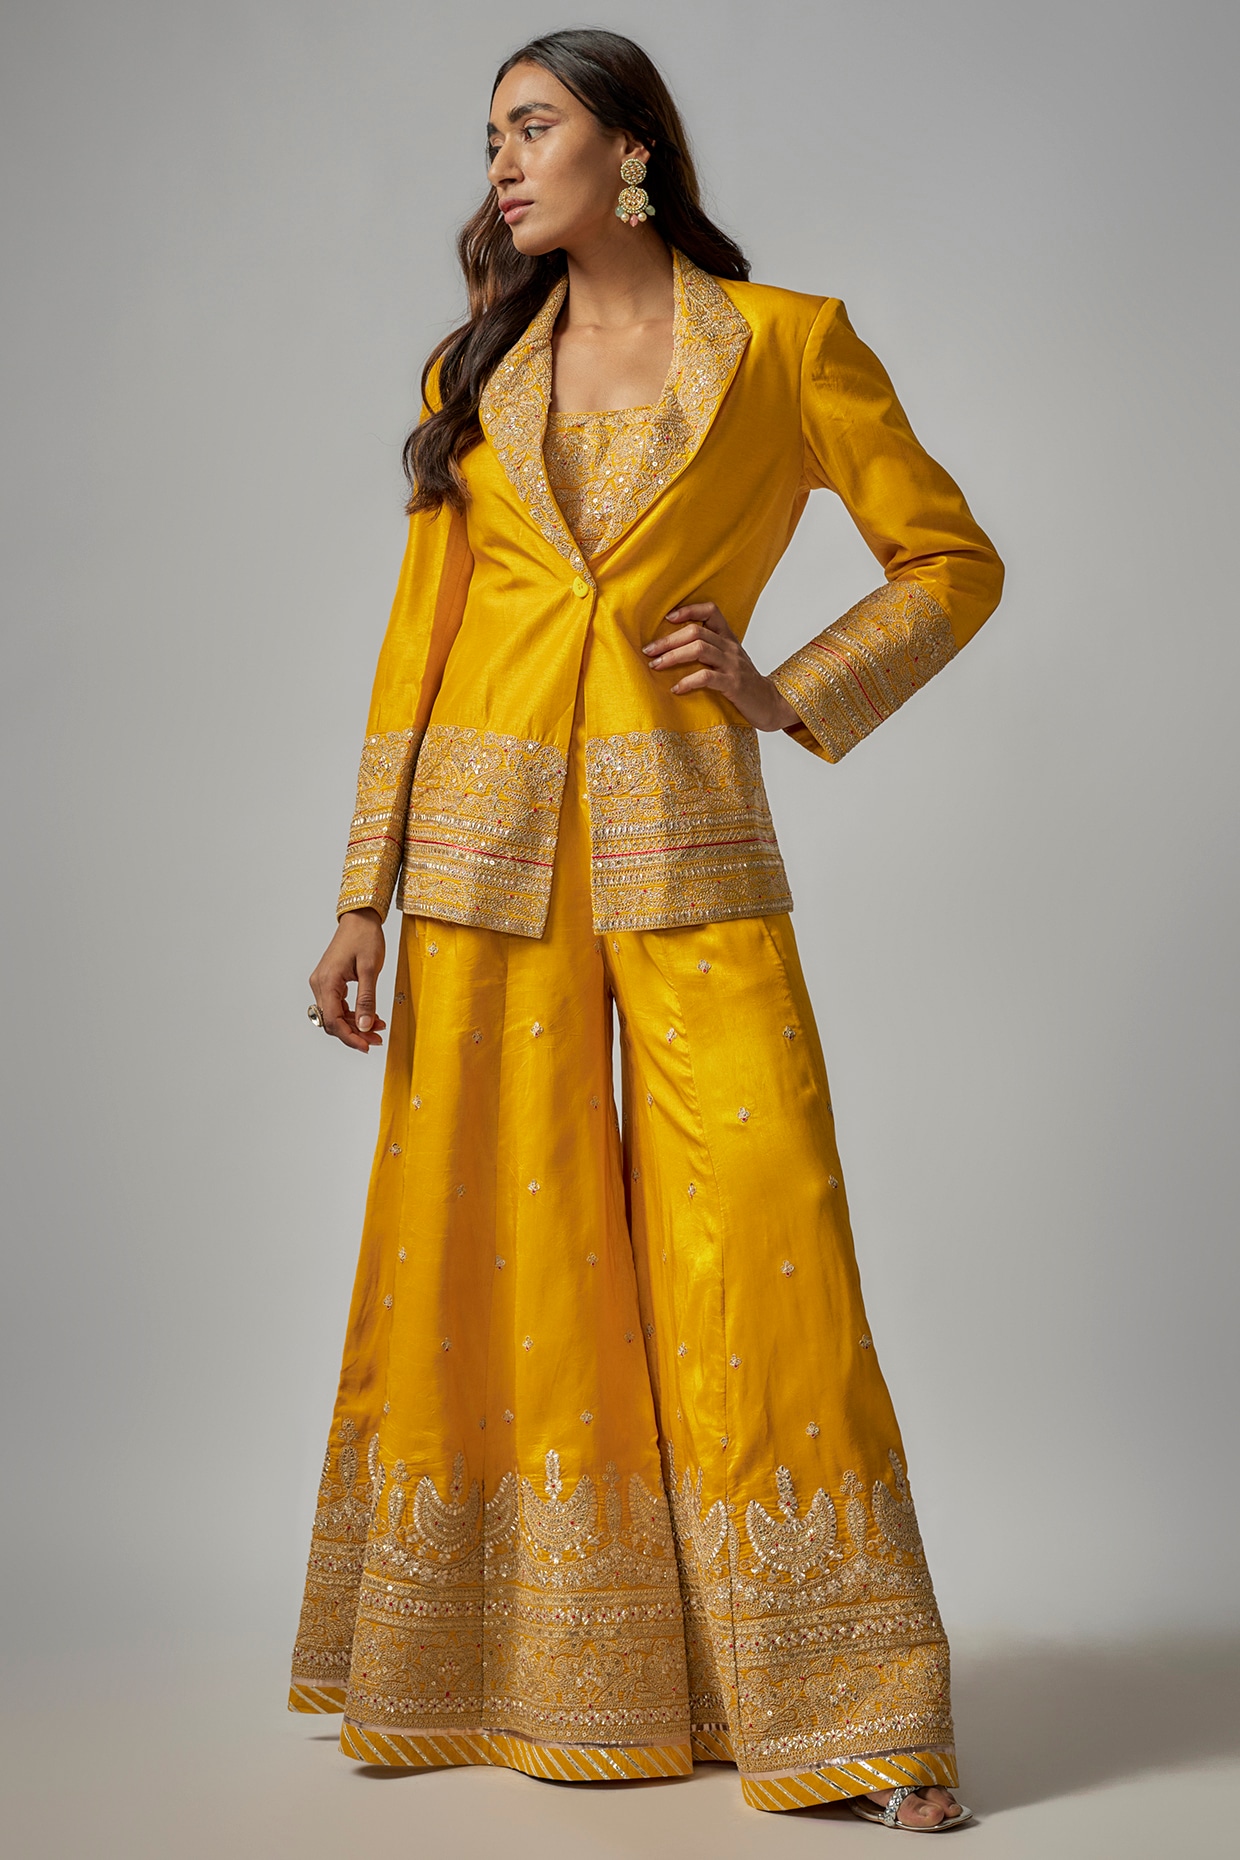 Buy More You Lehenga for Women | Wedding Dress for Women | Haldi Dress for  Women | Ghagra Choli for Women | Yellow Lehenga for Haldi Ceremony at  Amazon.in